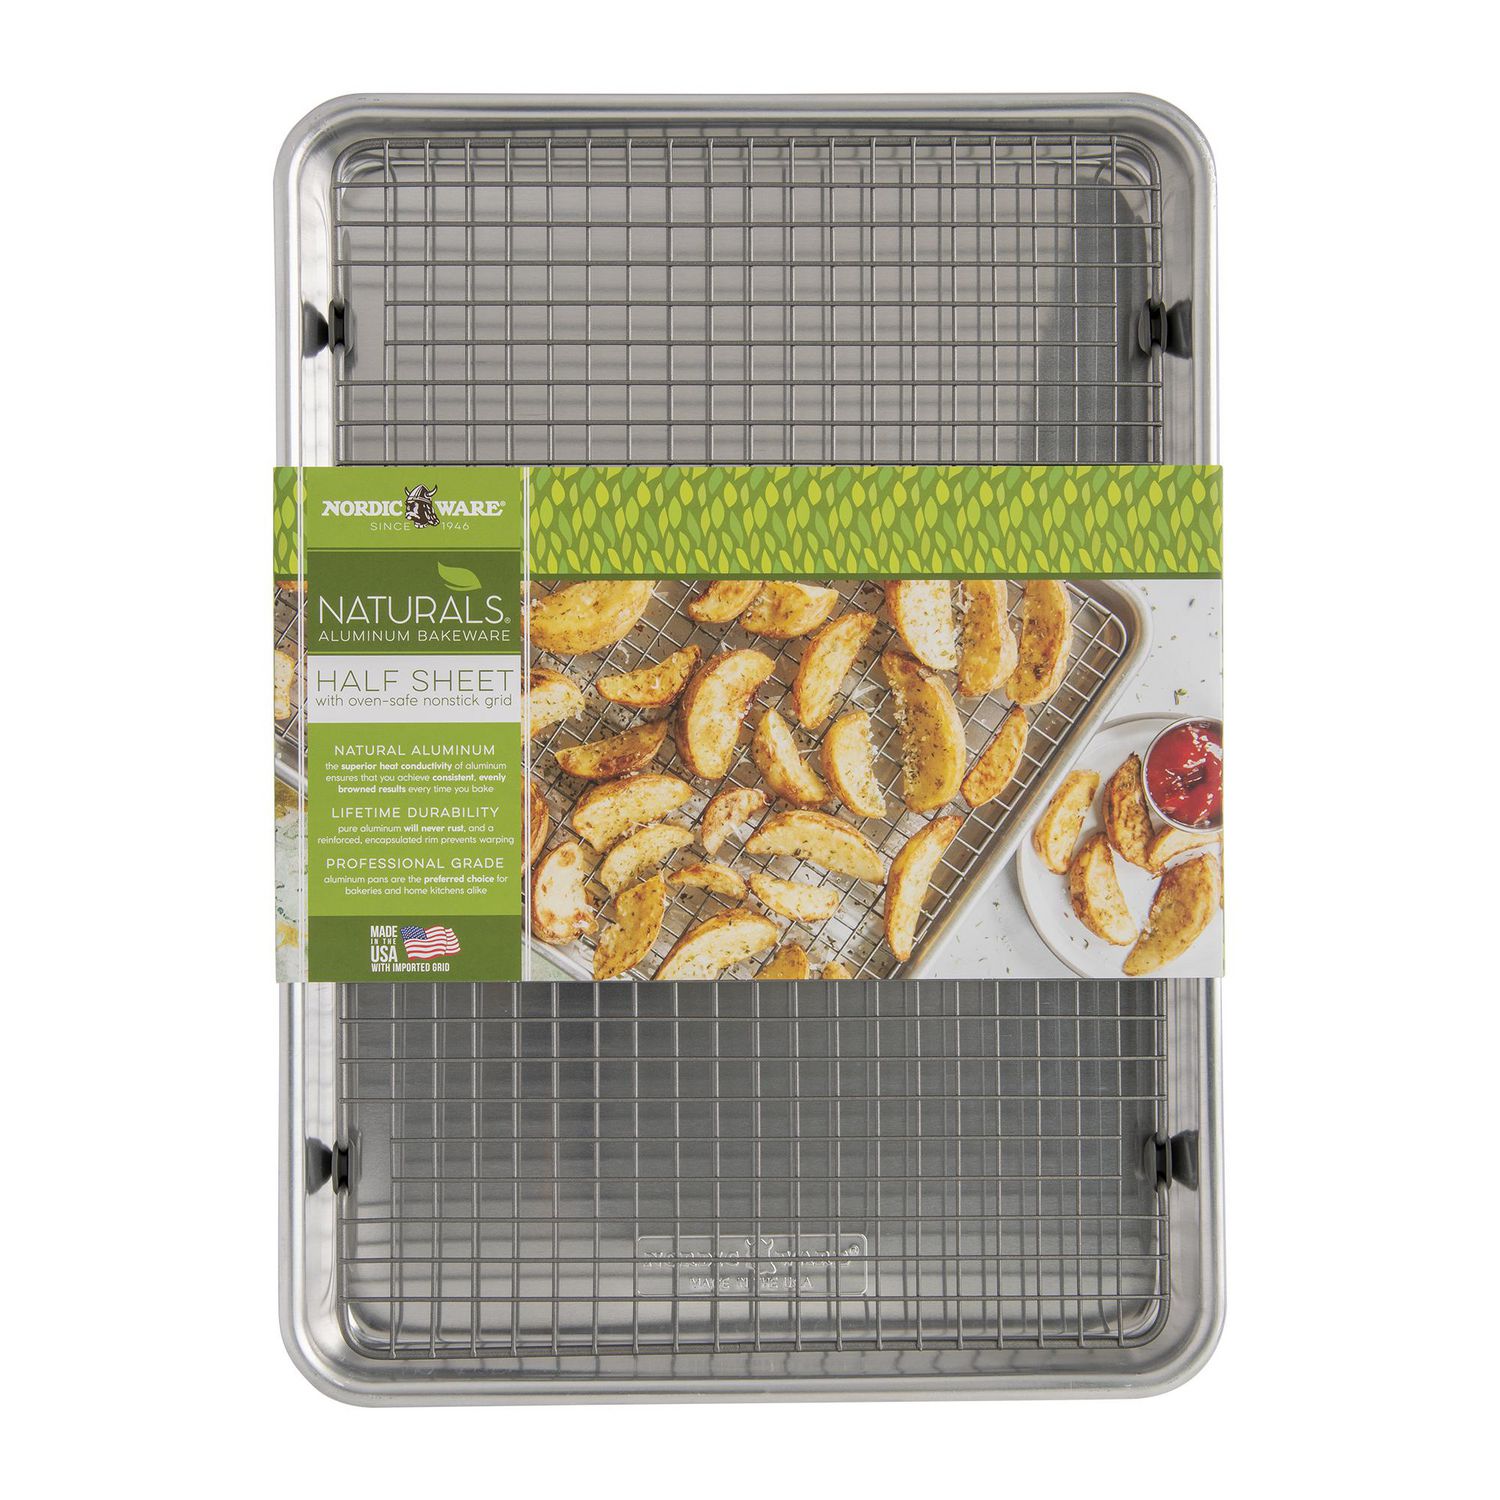 Naturals® Half Sheet with Oven-Safe Nonstick Grid, Aluminum Baking Sheet